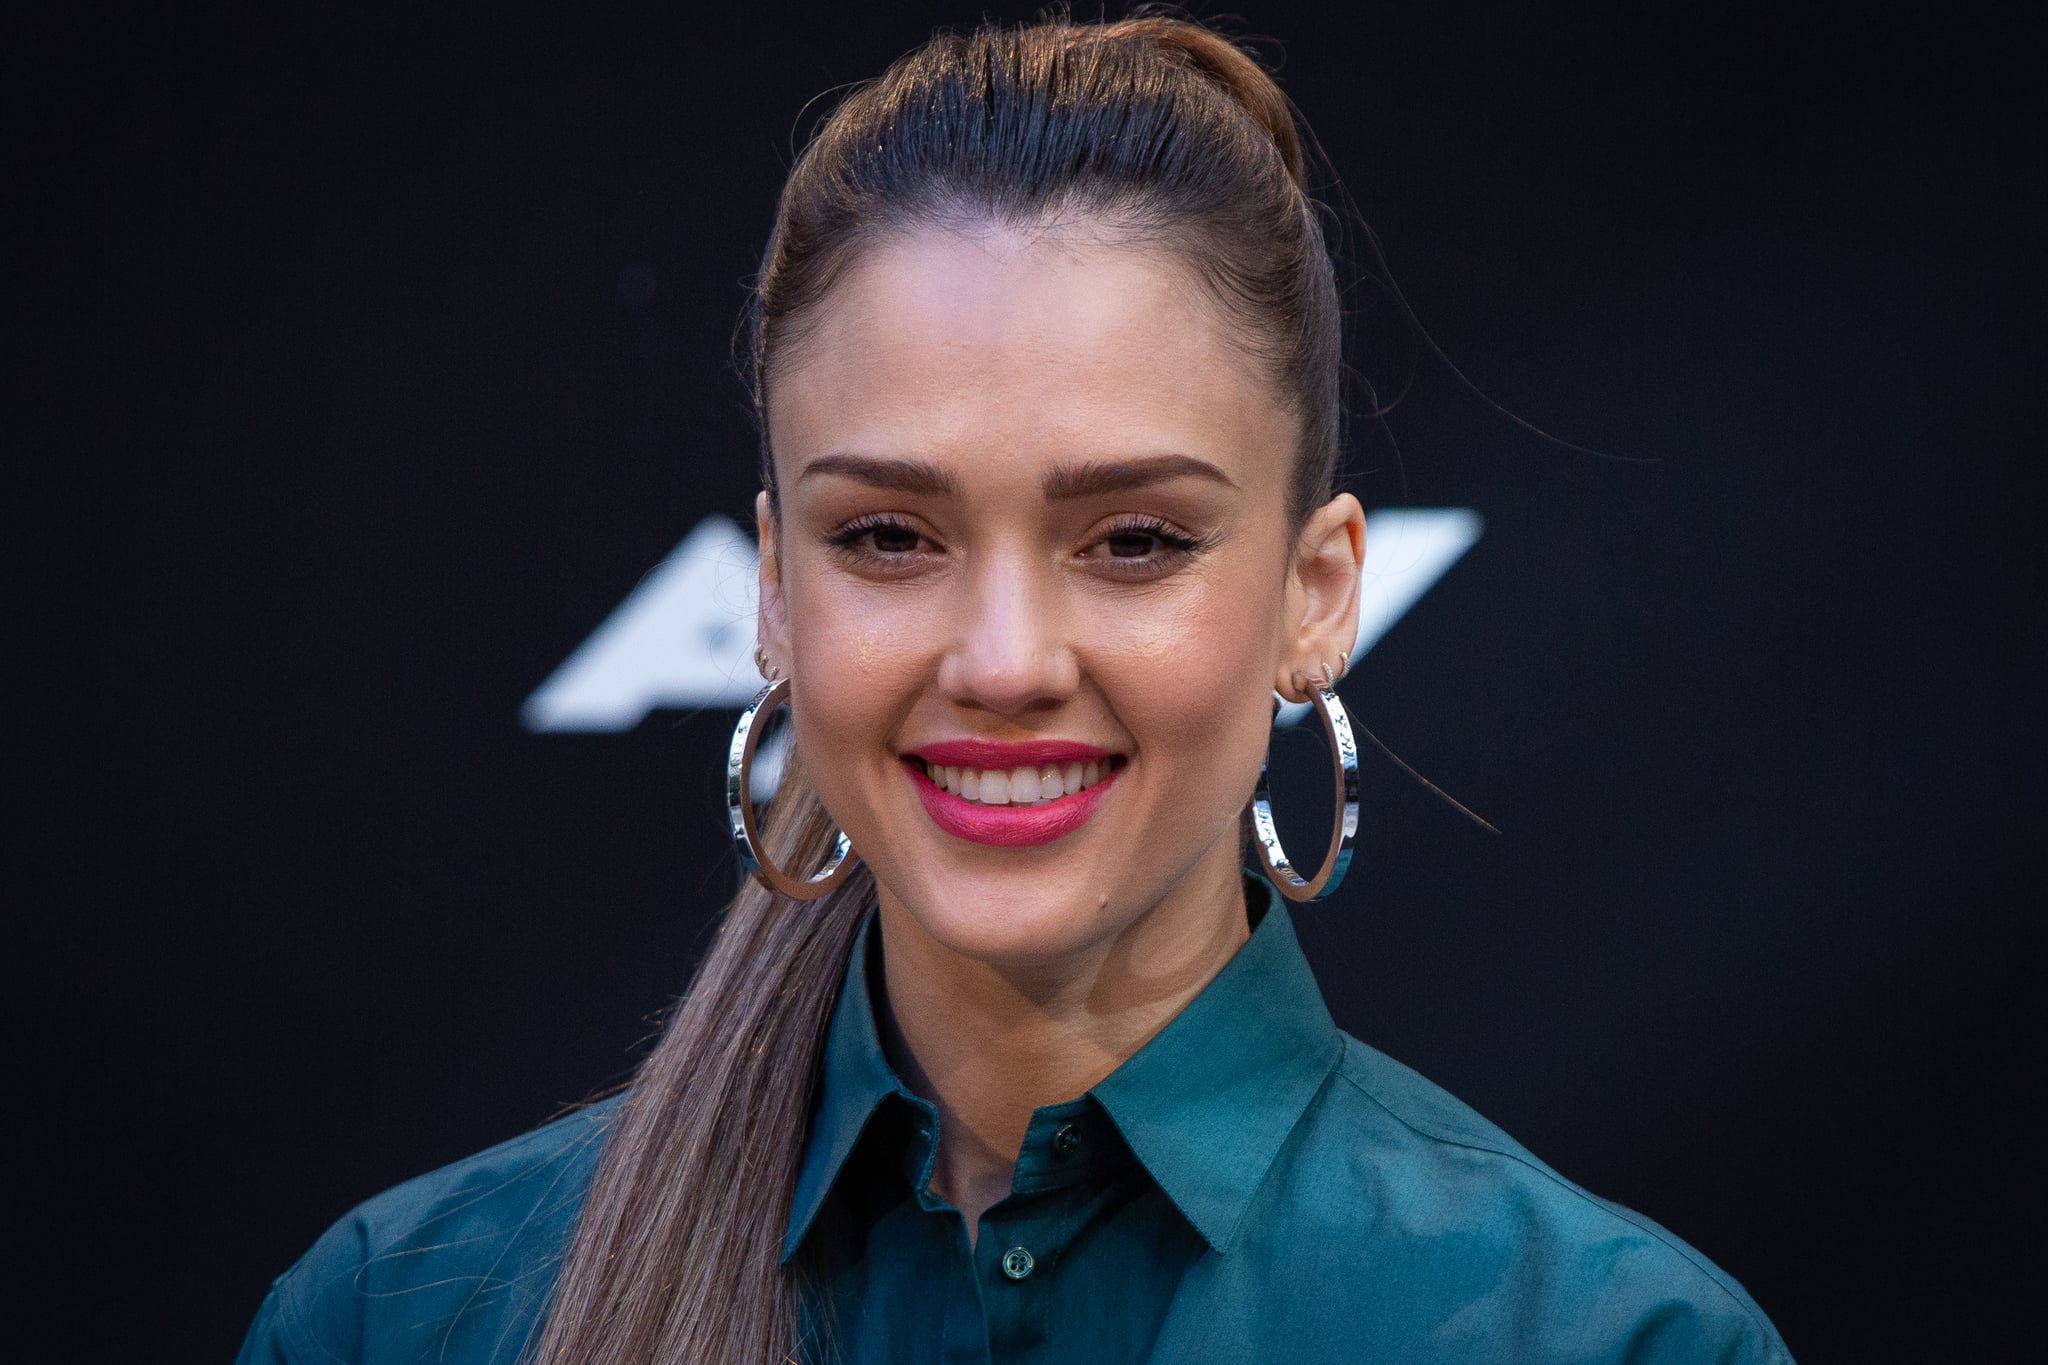 MADRID, SPAIN - JUNE 10: Actress Jessica Alba attends